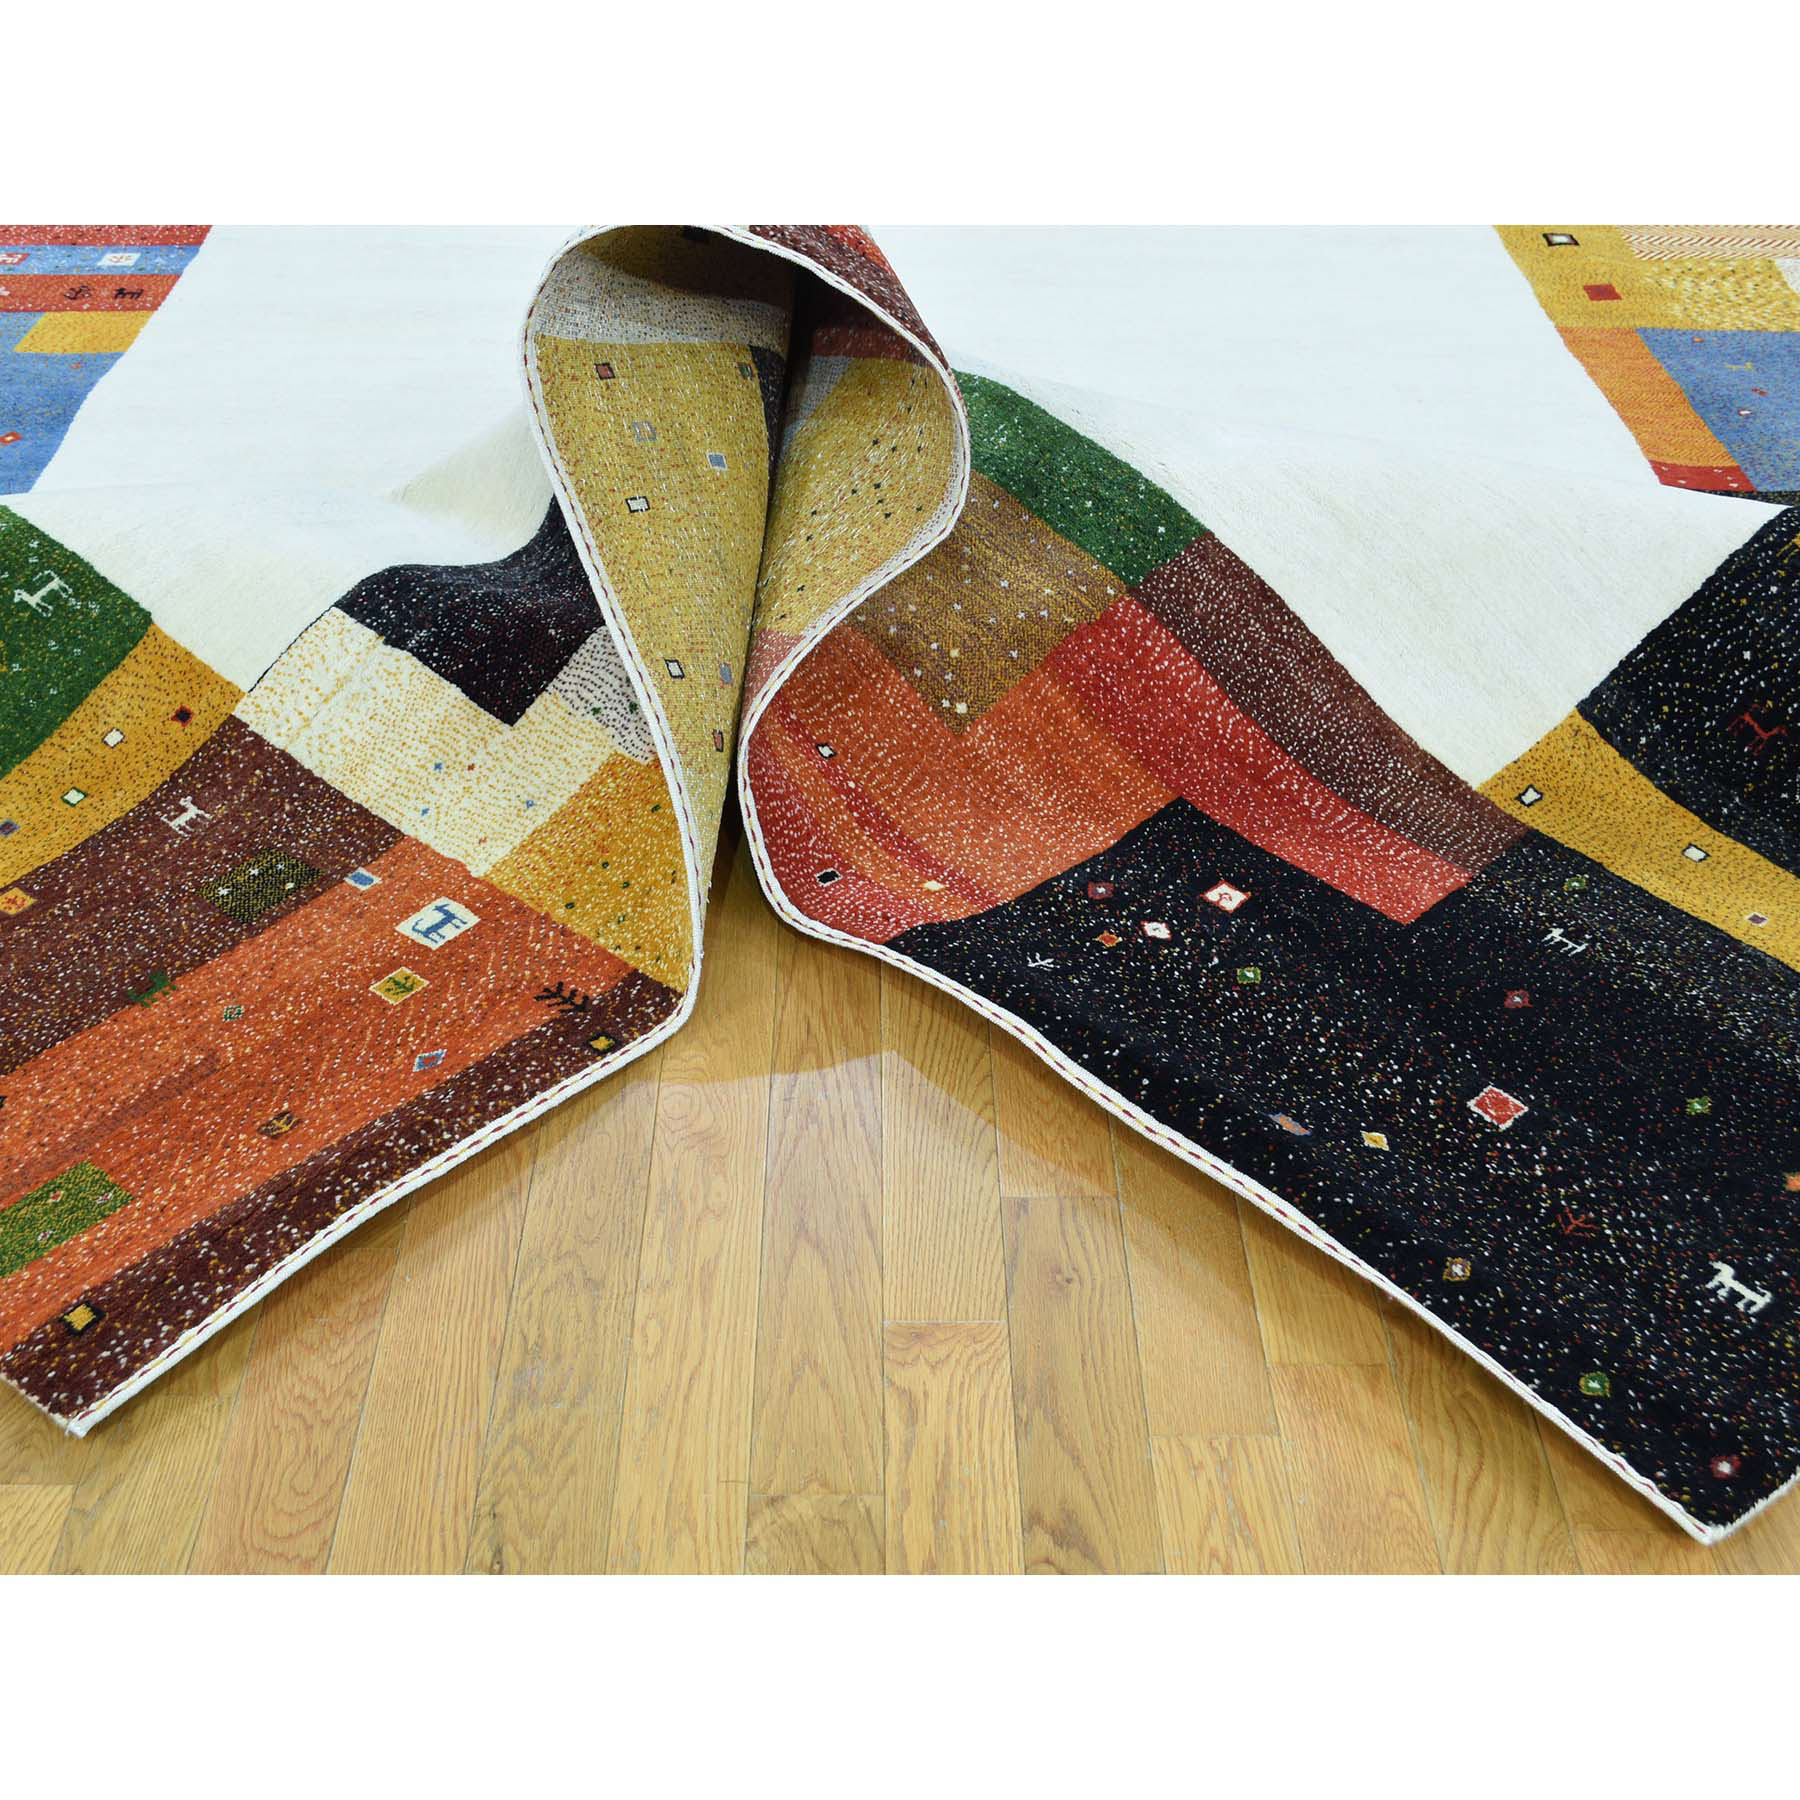 9-8 x13-5  100 Percent Wool Hand-Knotted Folk Art Gabbeh Oriental Rug 